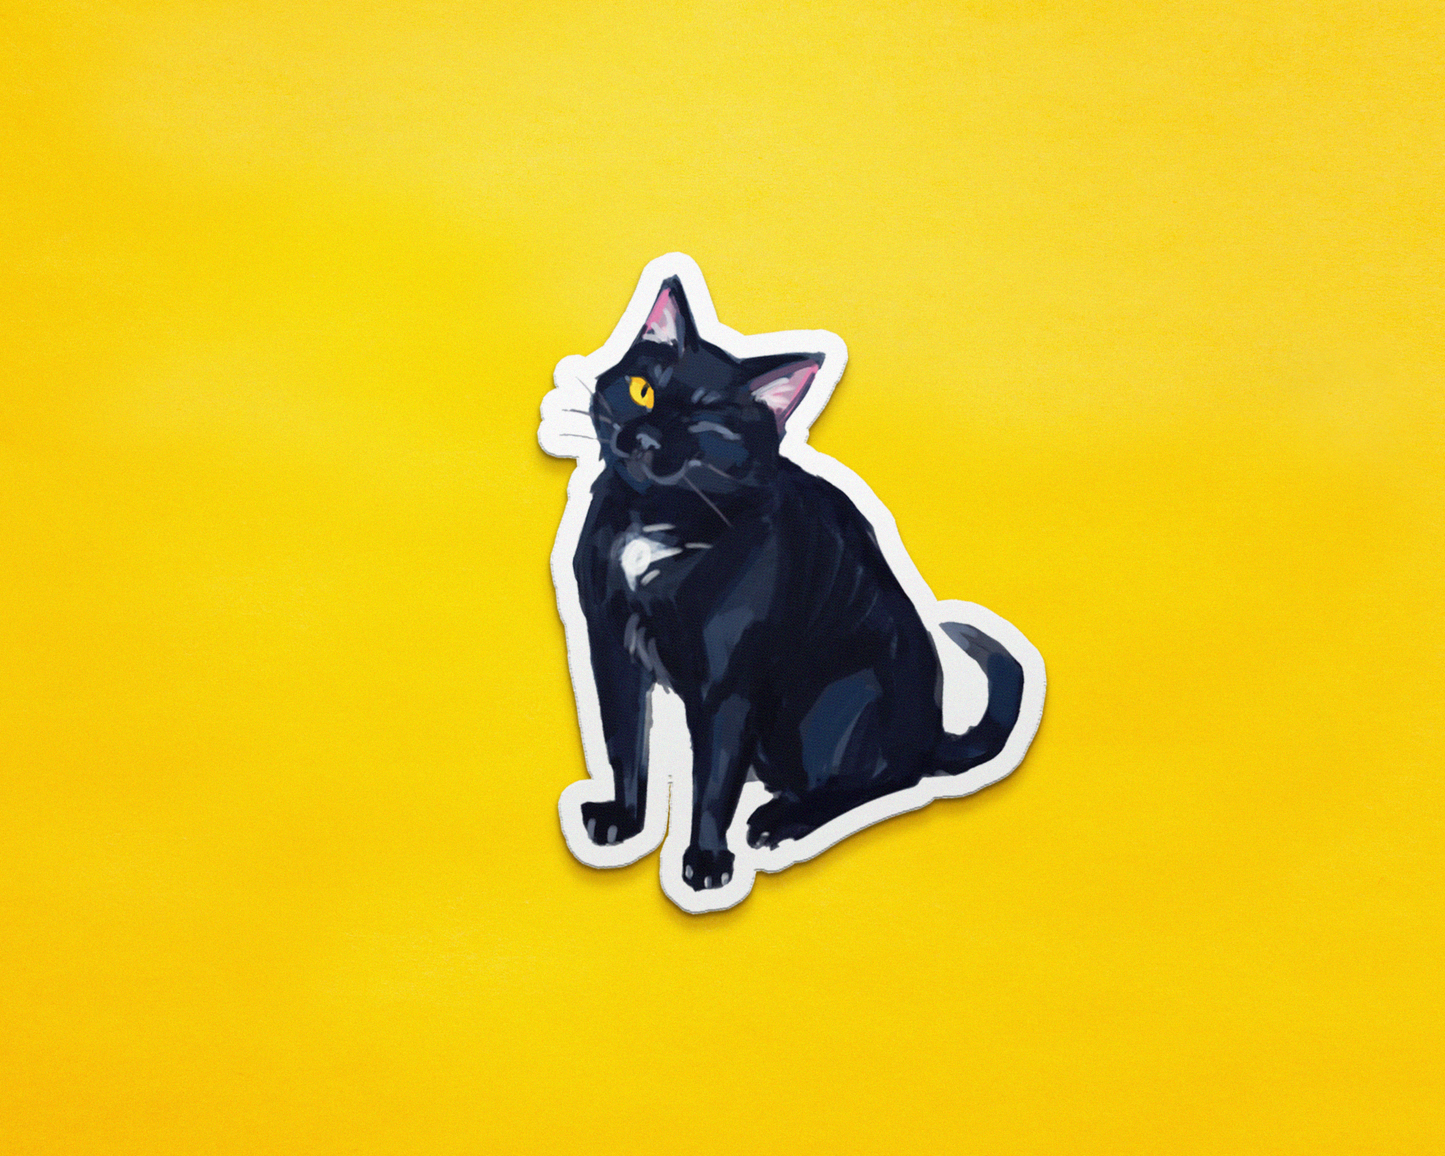 Black Cat Stickers - Vinyl Stickers